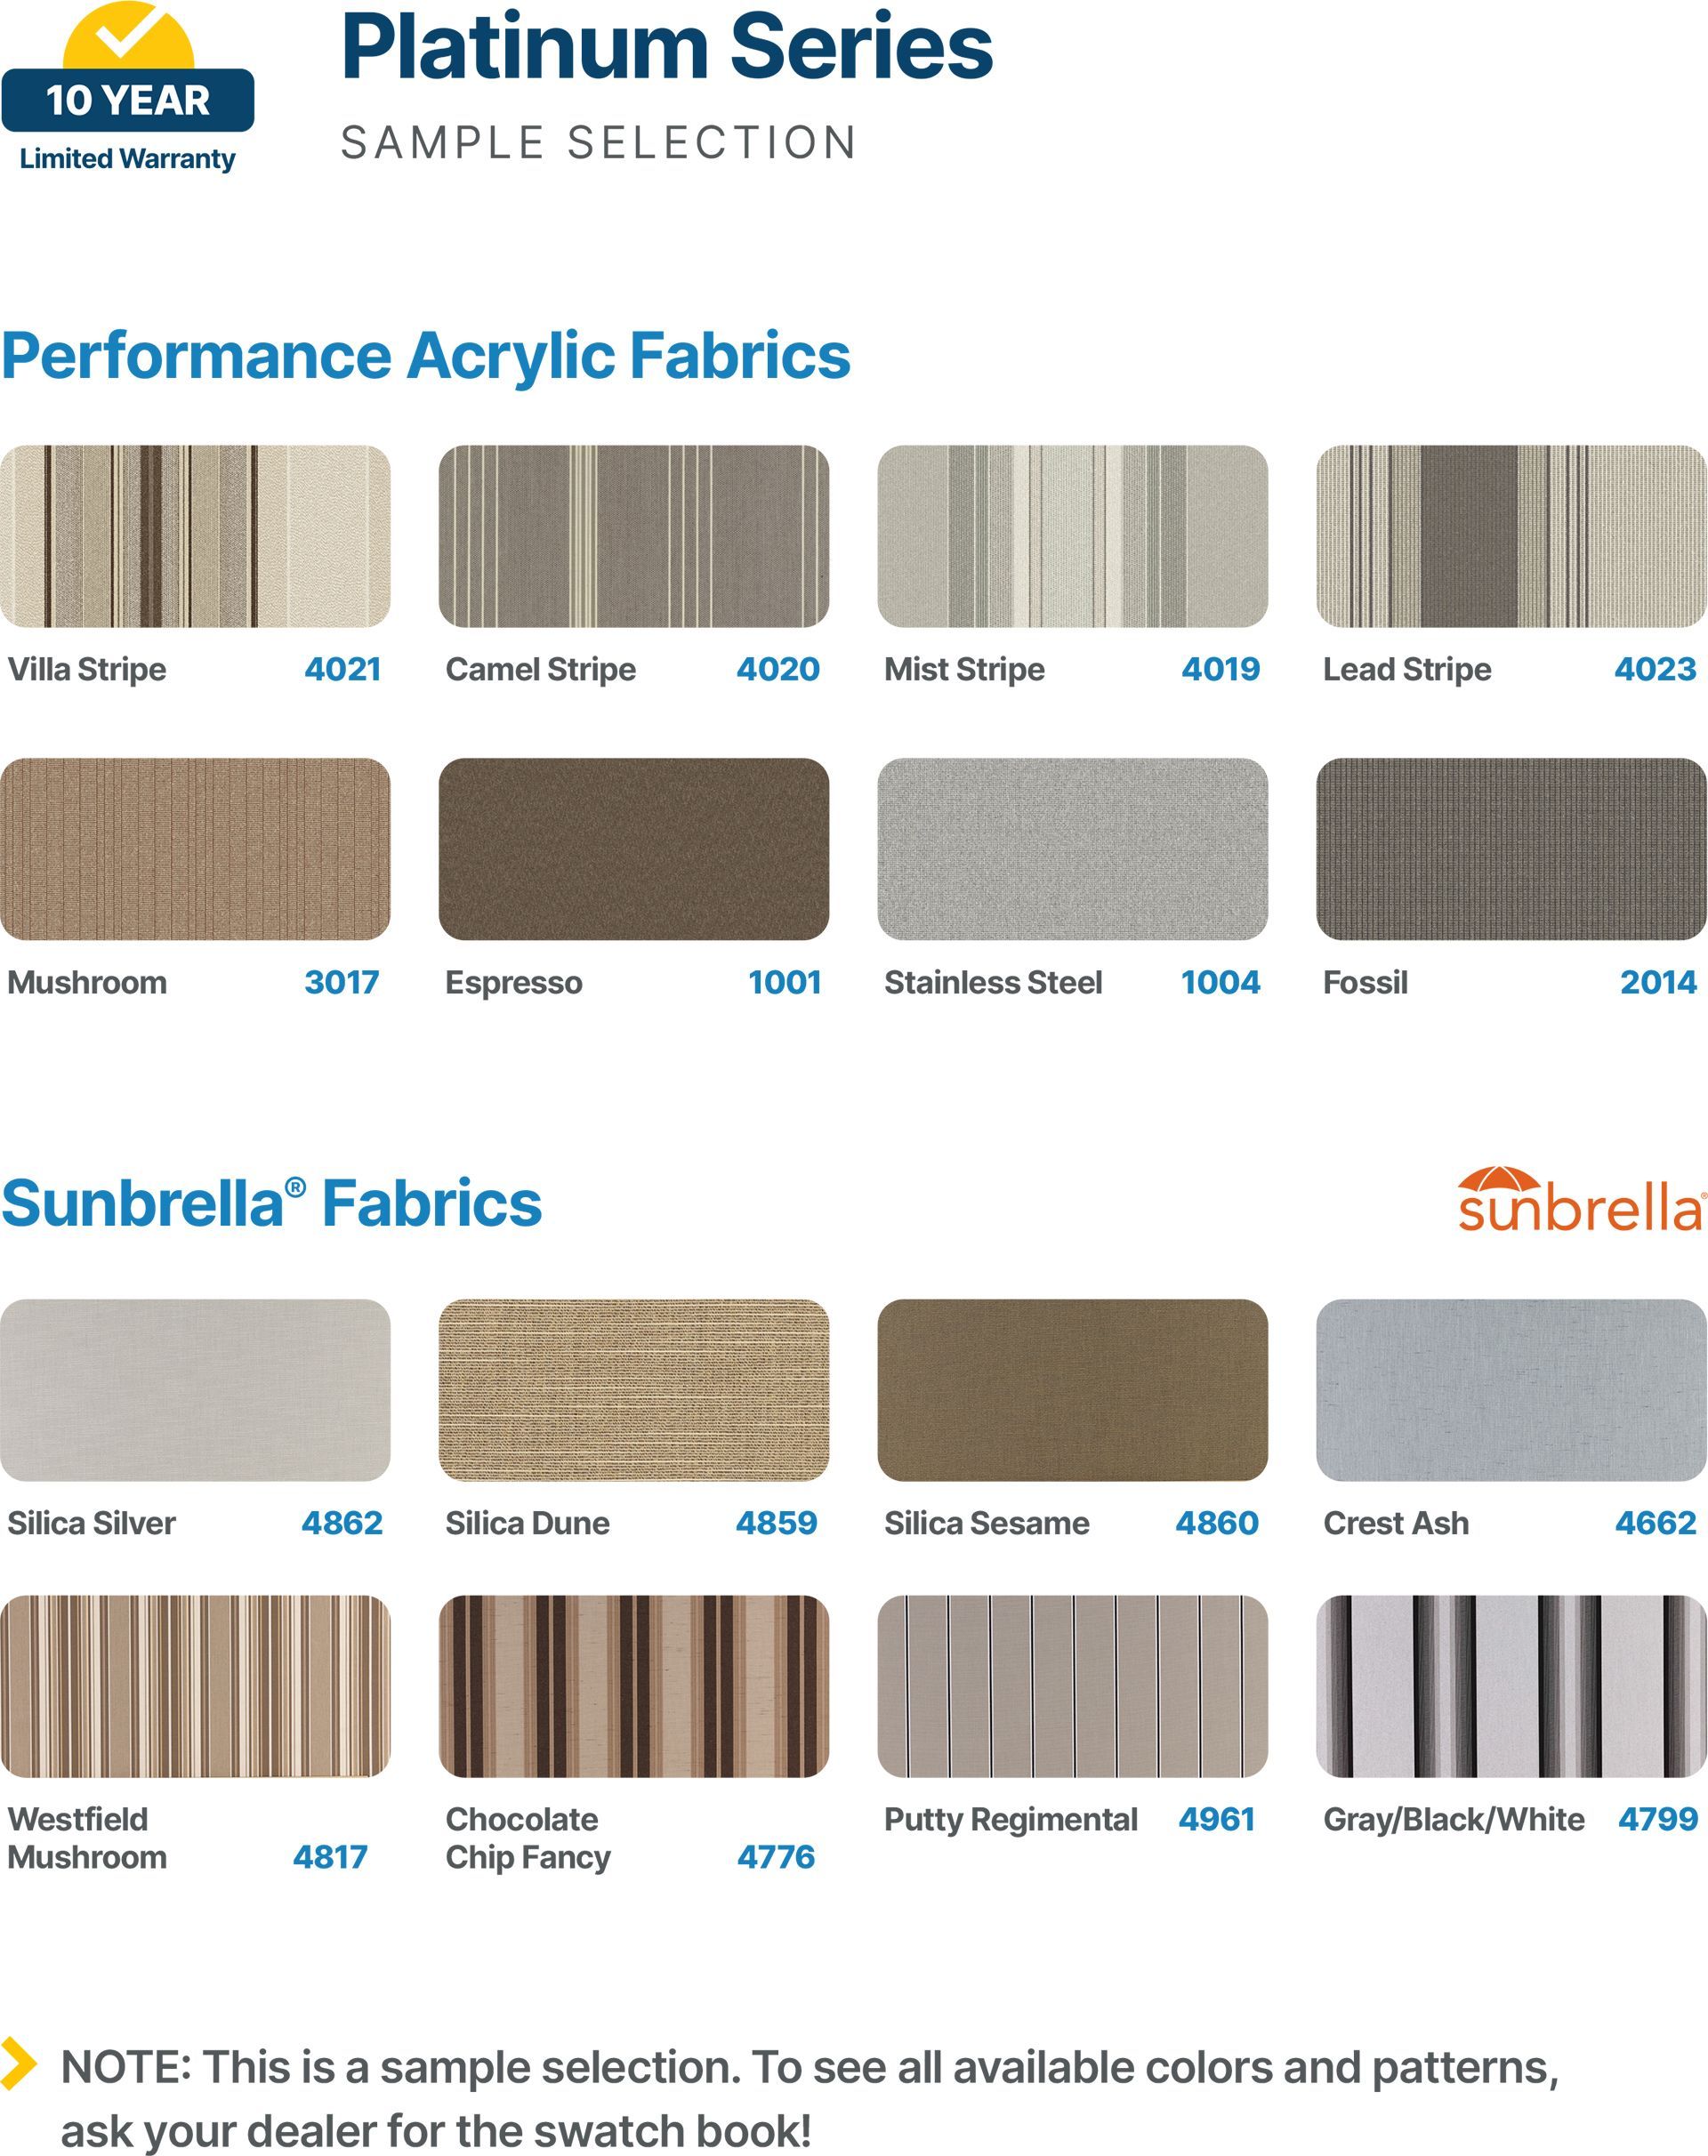 SunSetter Platinum Series Fabrics